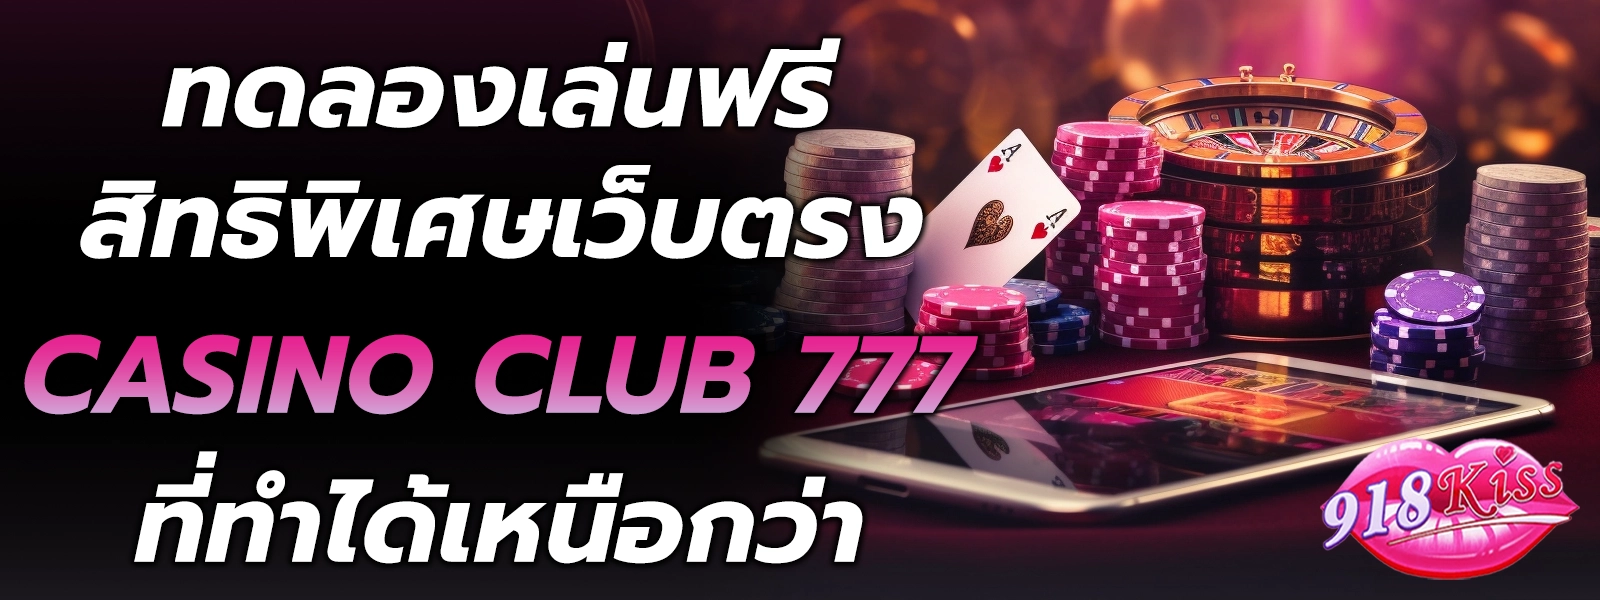 casino club 777 ทดลงเล่น บาคาร่า